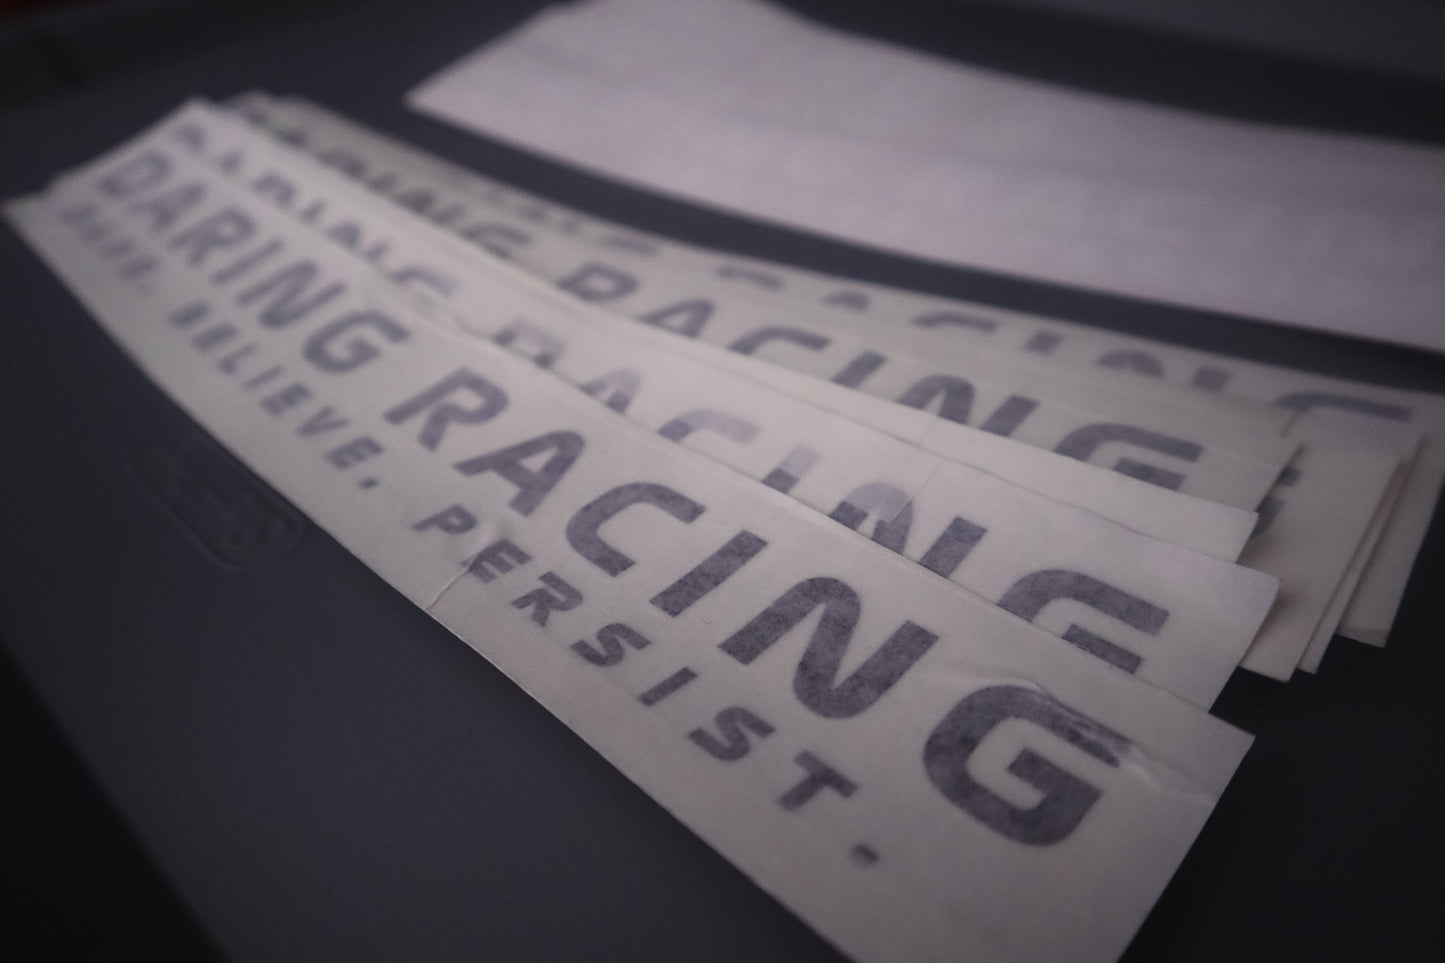 Stickers Daring Racing